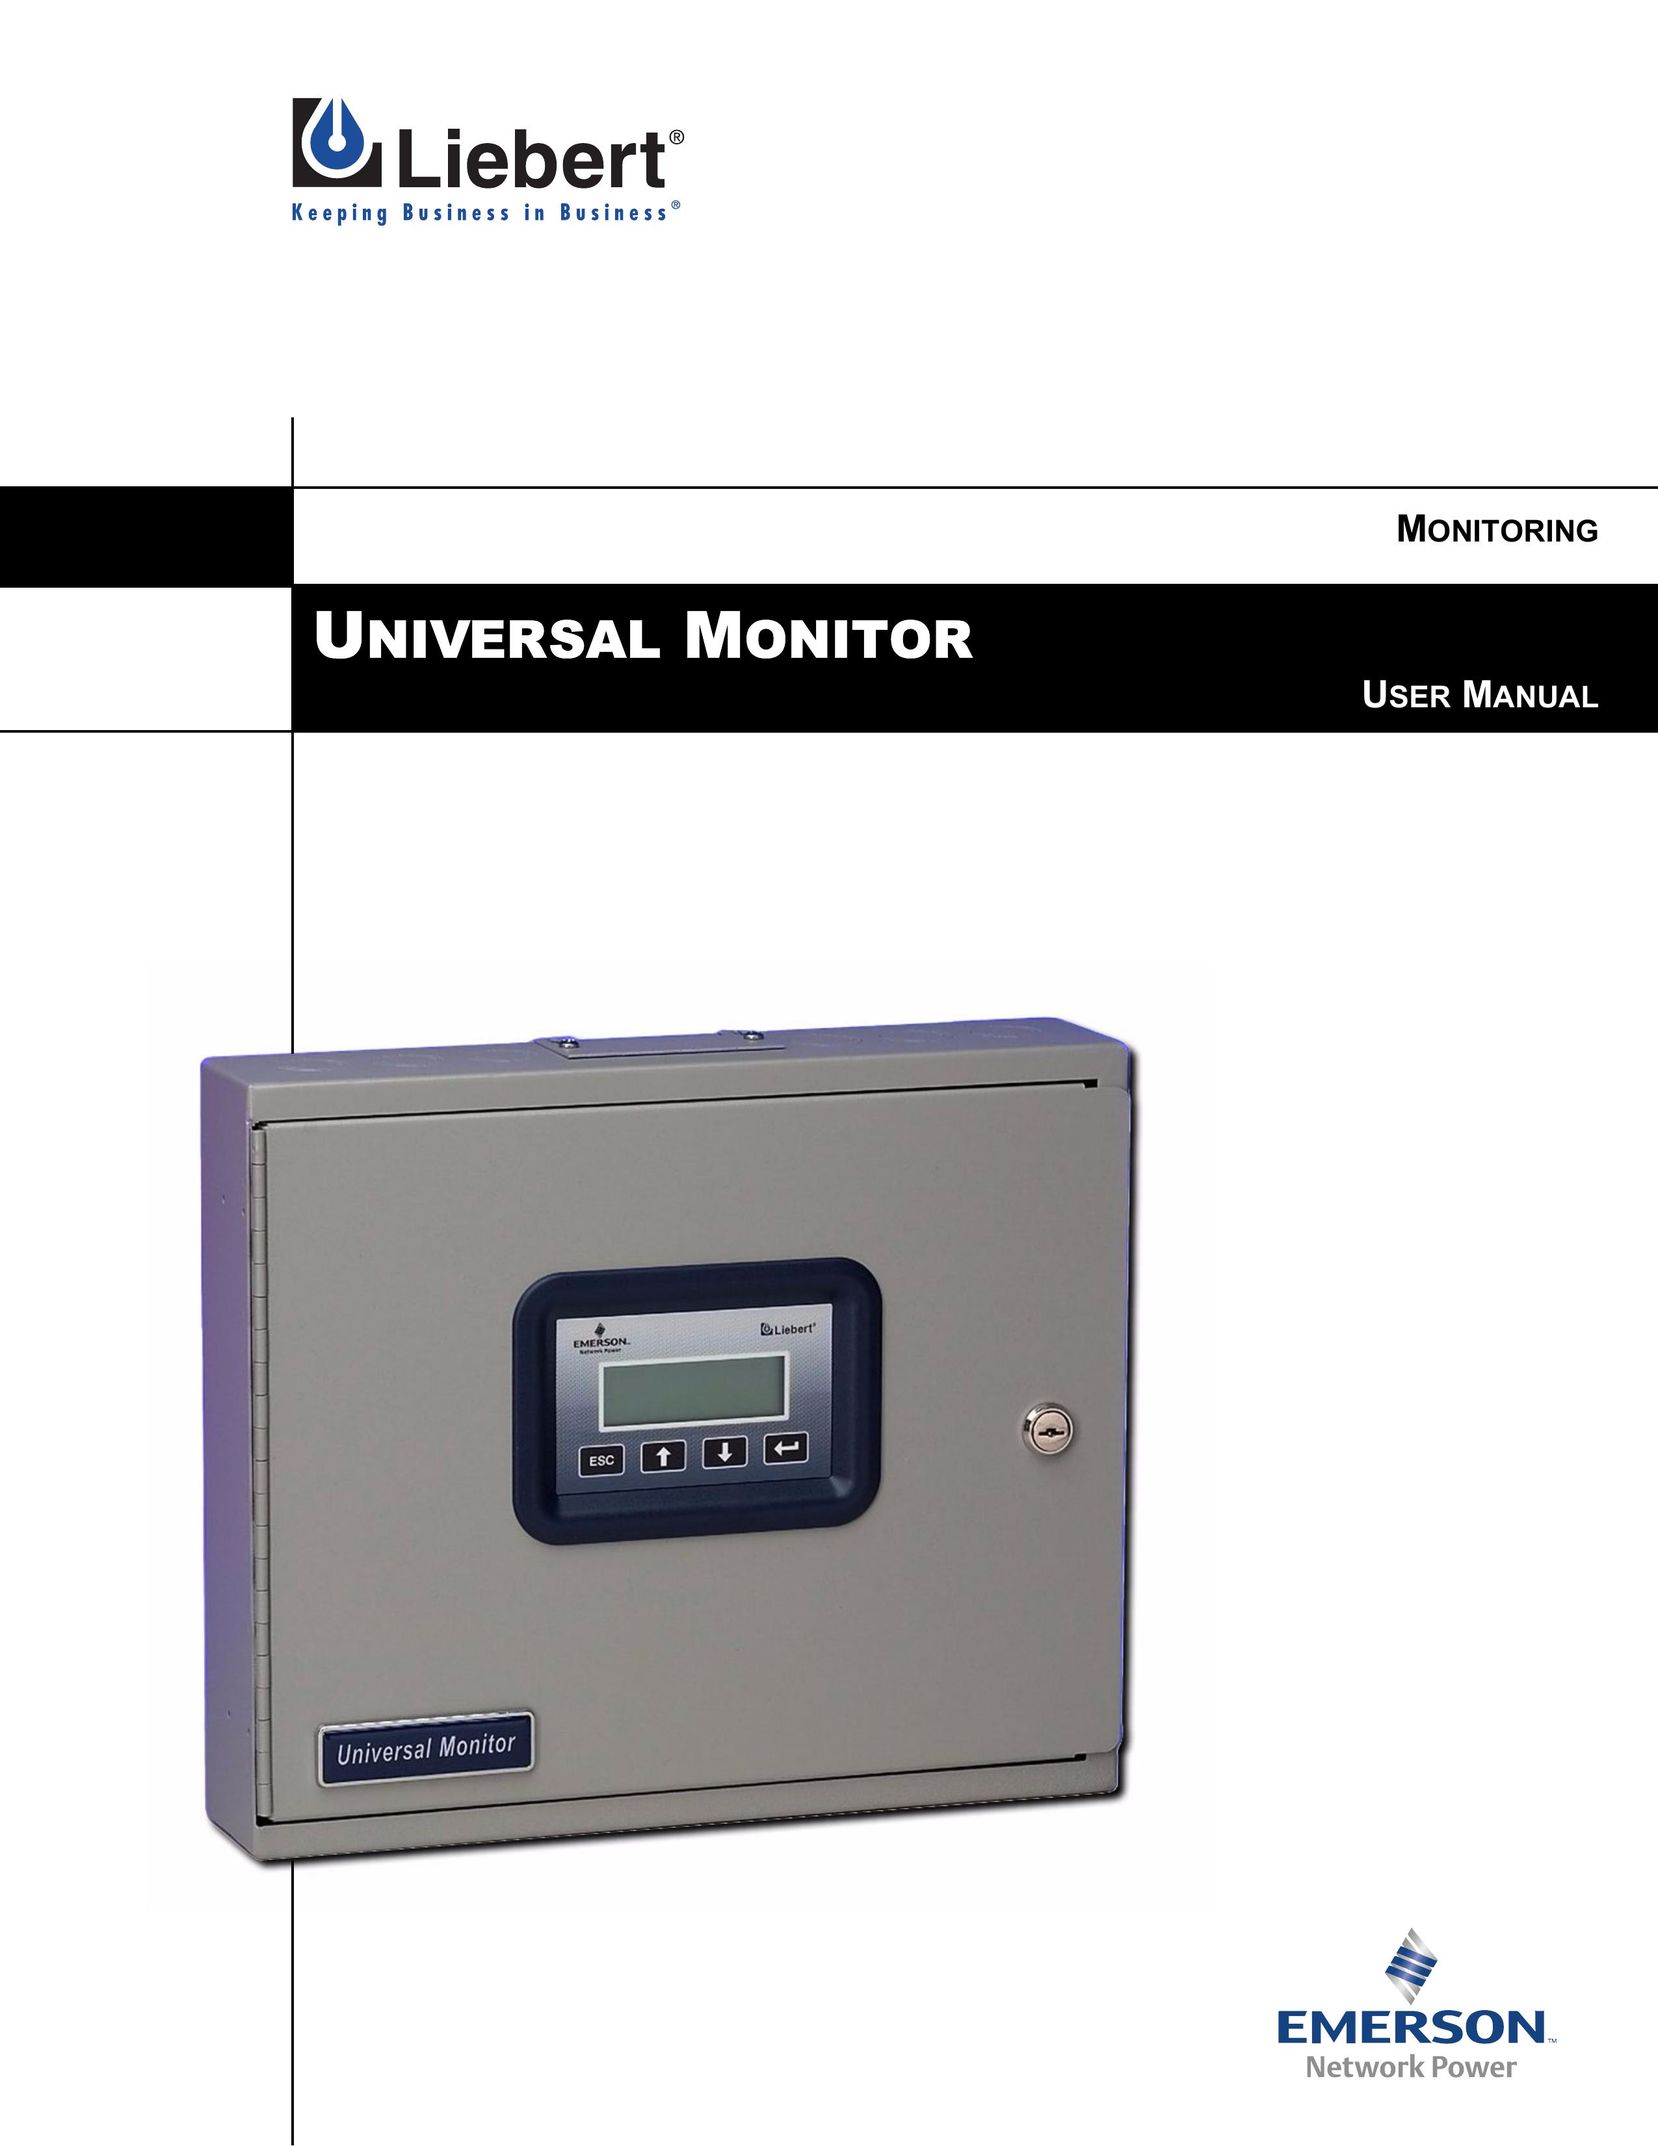 Liebert Universal Monitor Pager User Manual